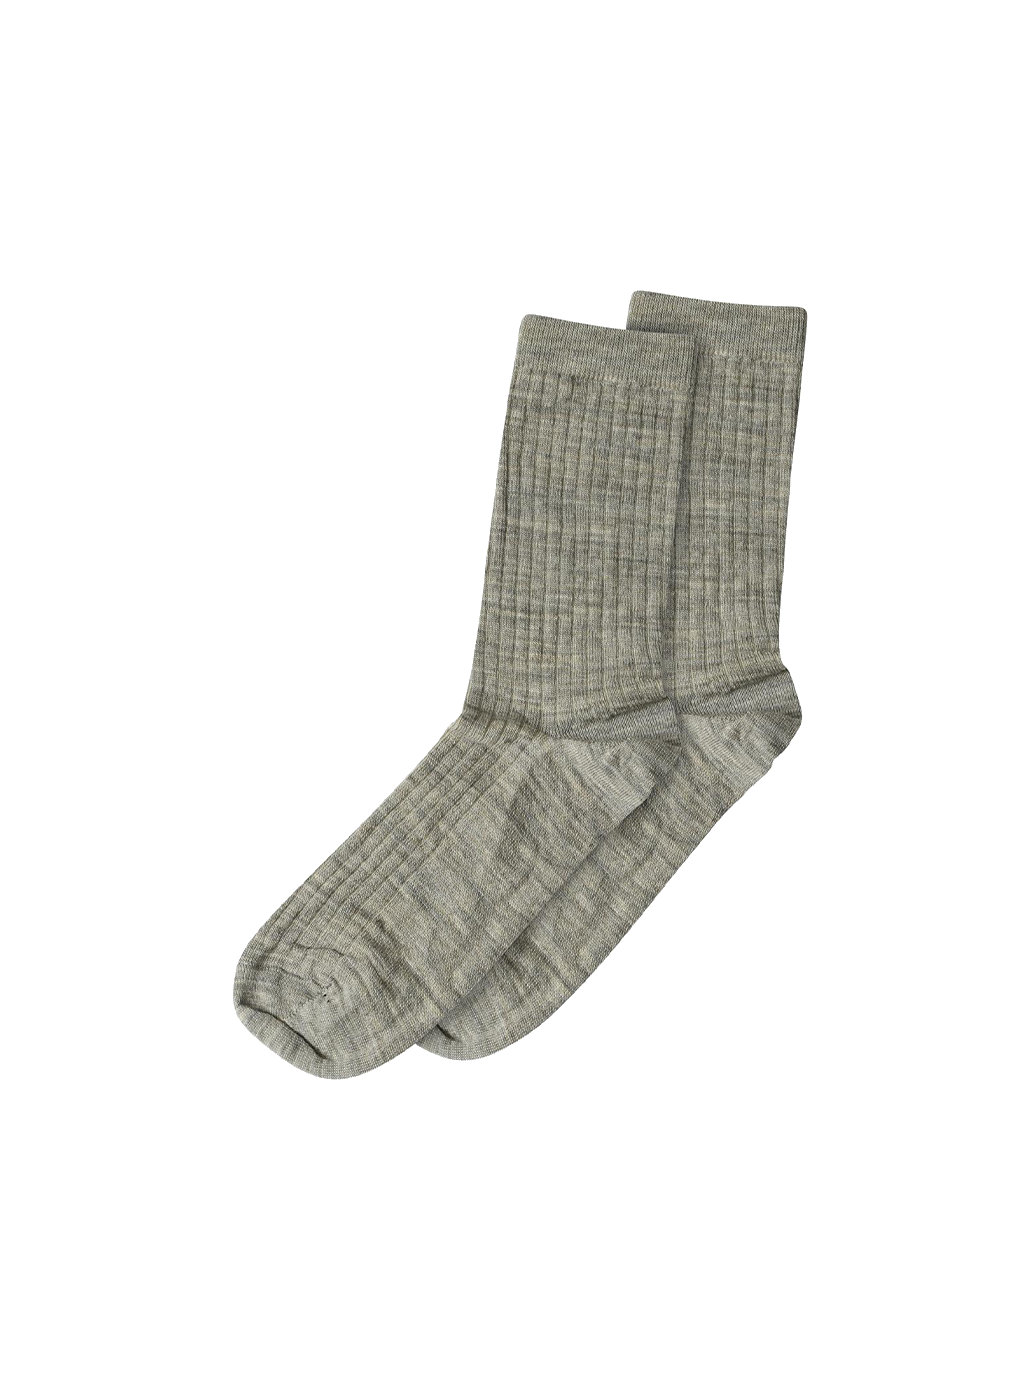 Socken aus Wollripp